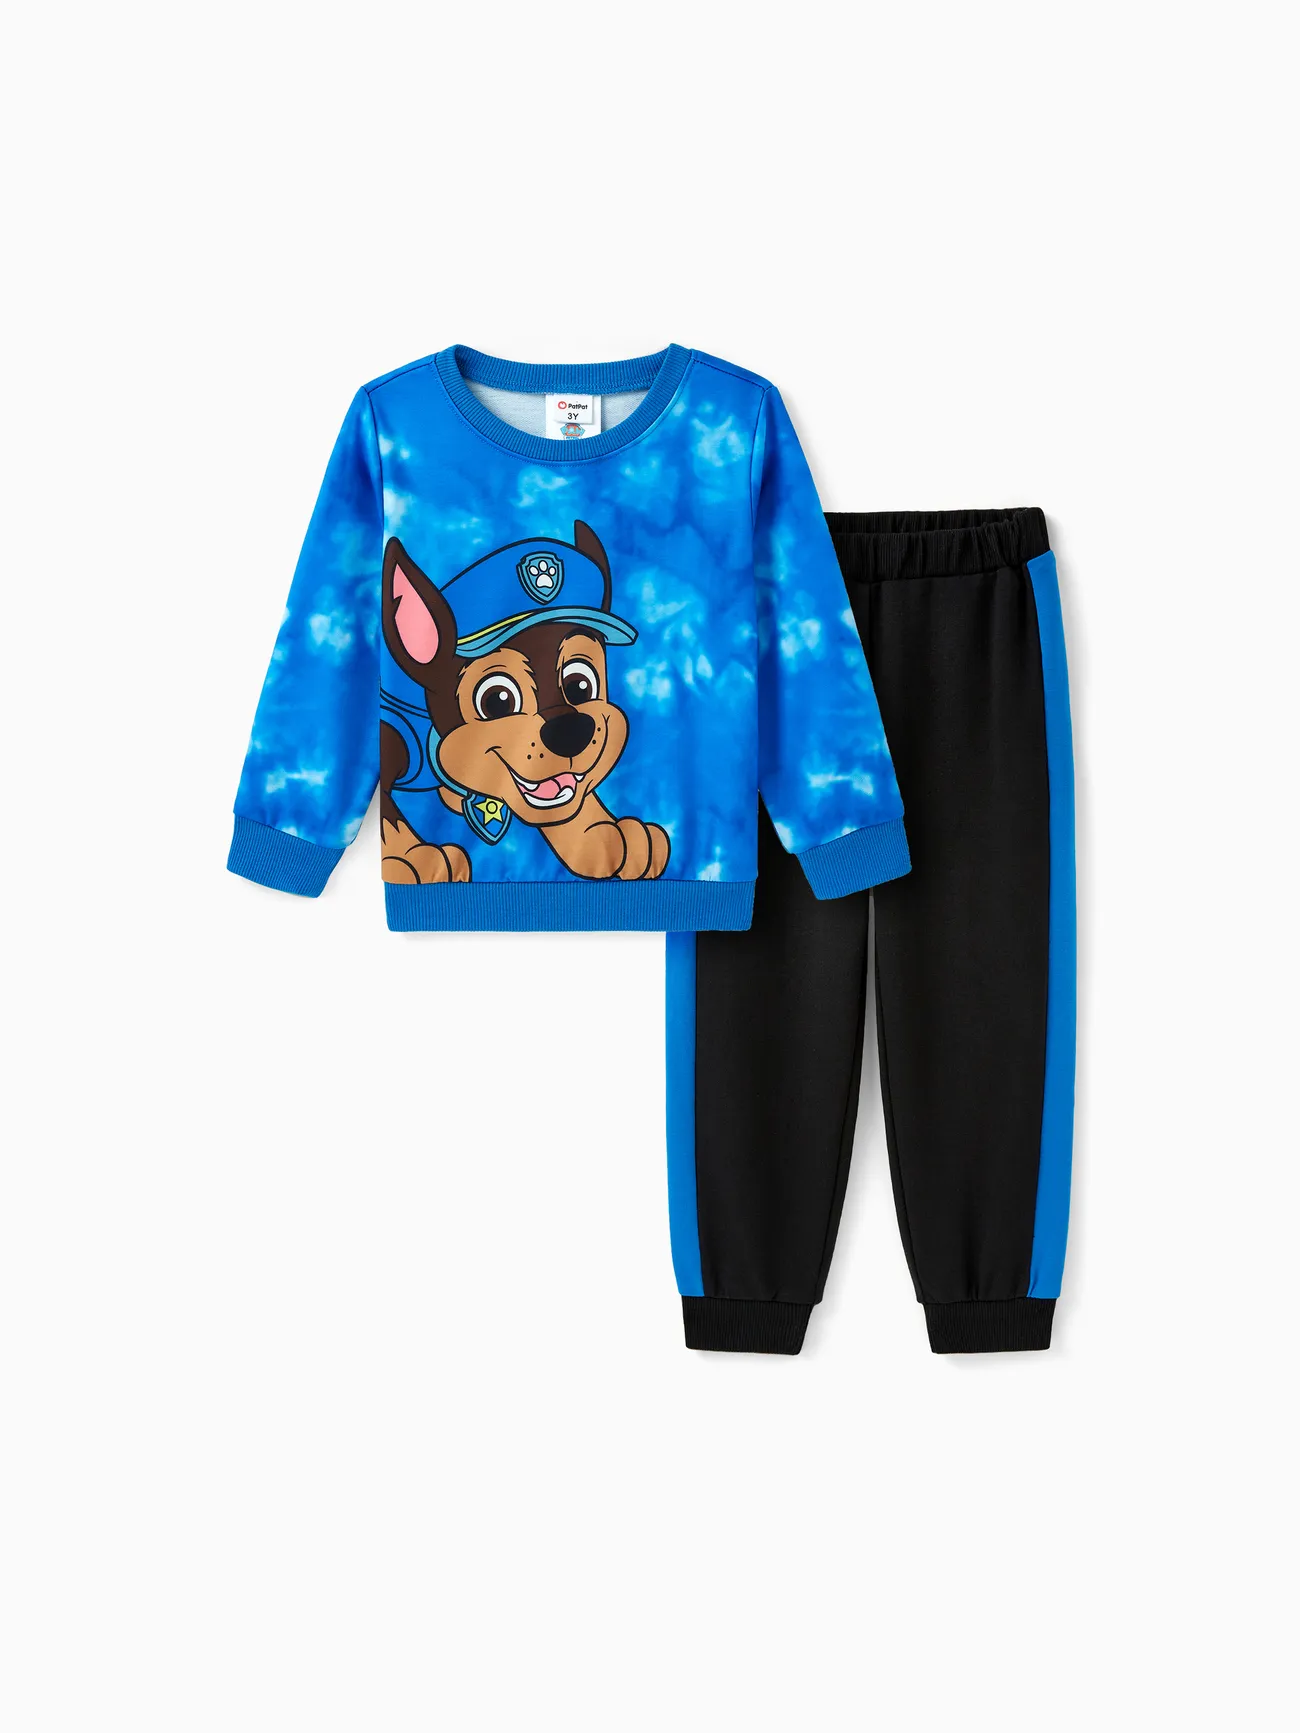 PAW Patrol 2pcs Toddler Girl/Boy Character Print Pullover Sweatshirt and Pants Set  Blue big image 1